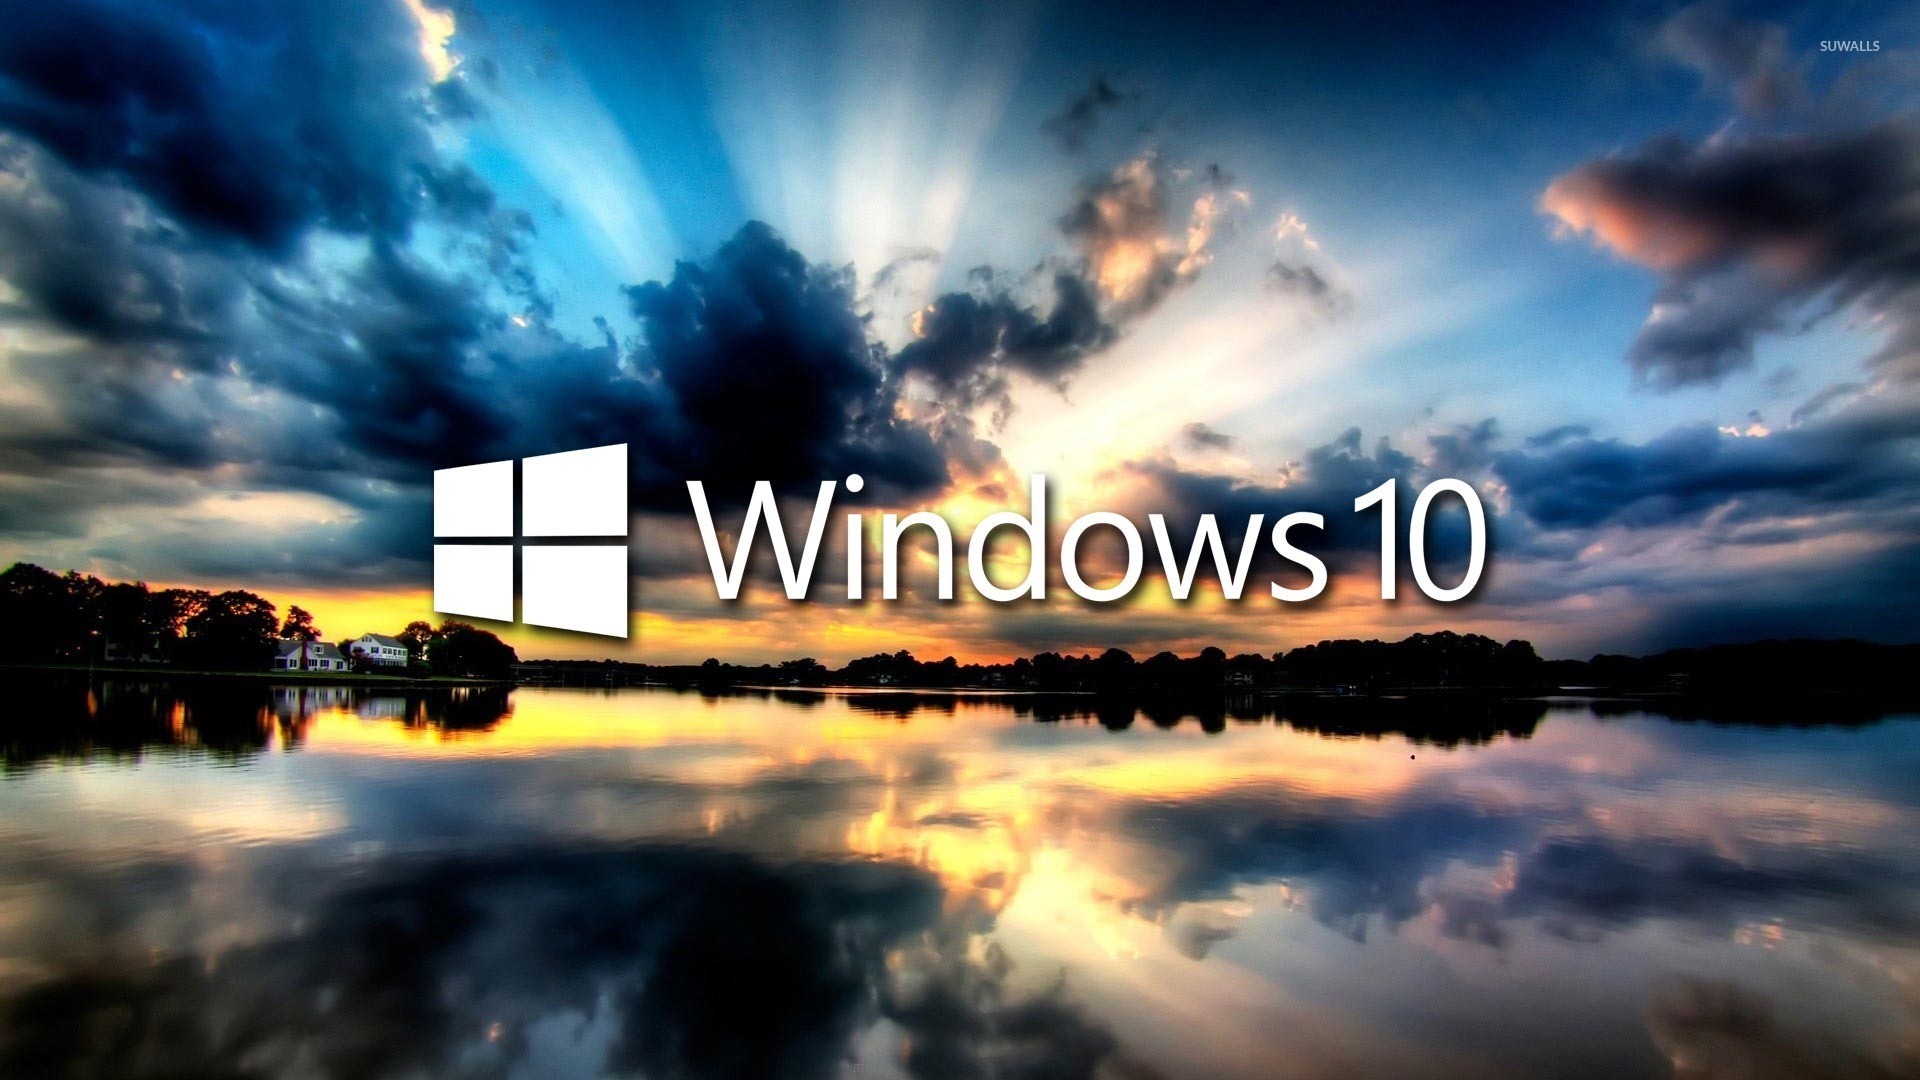  Wallpaper  for Windows  10    Download free beautiful full 